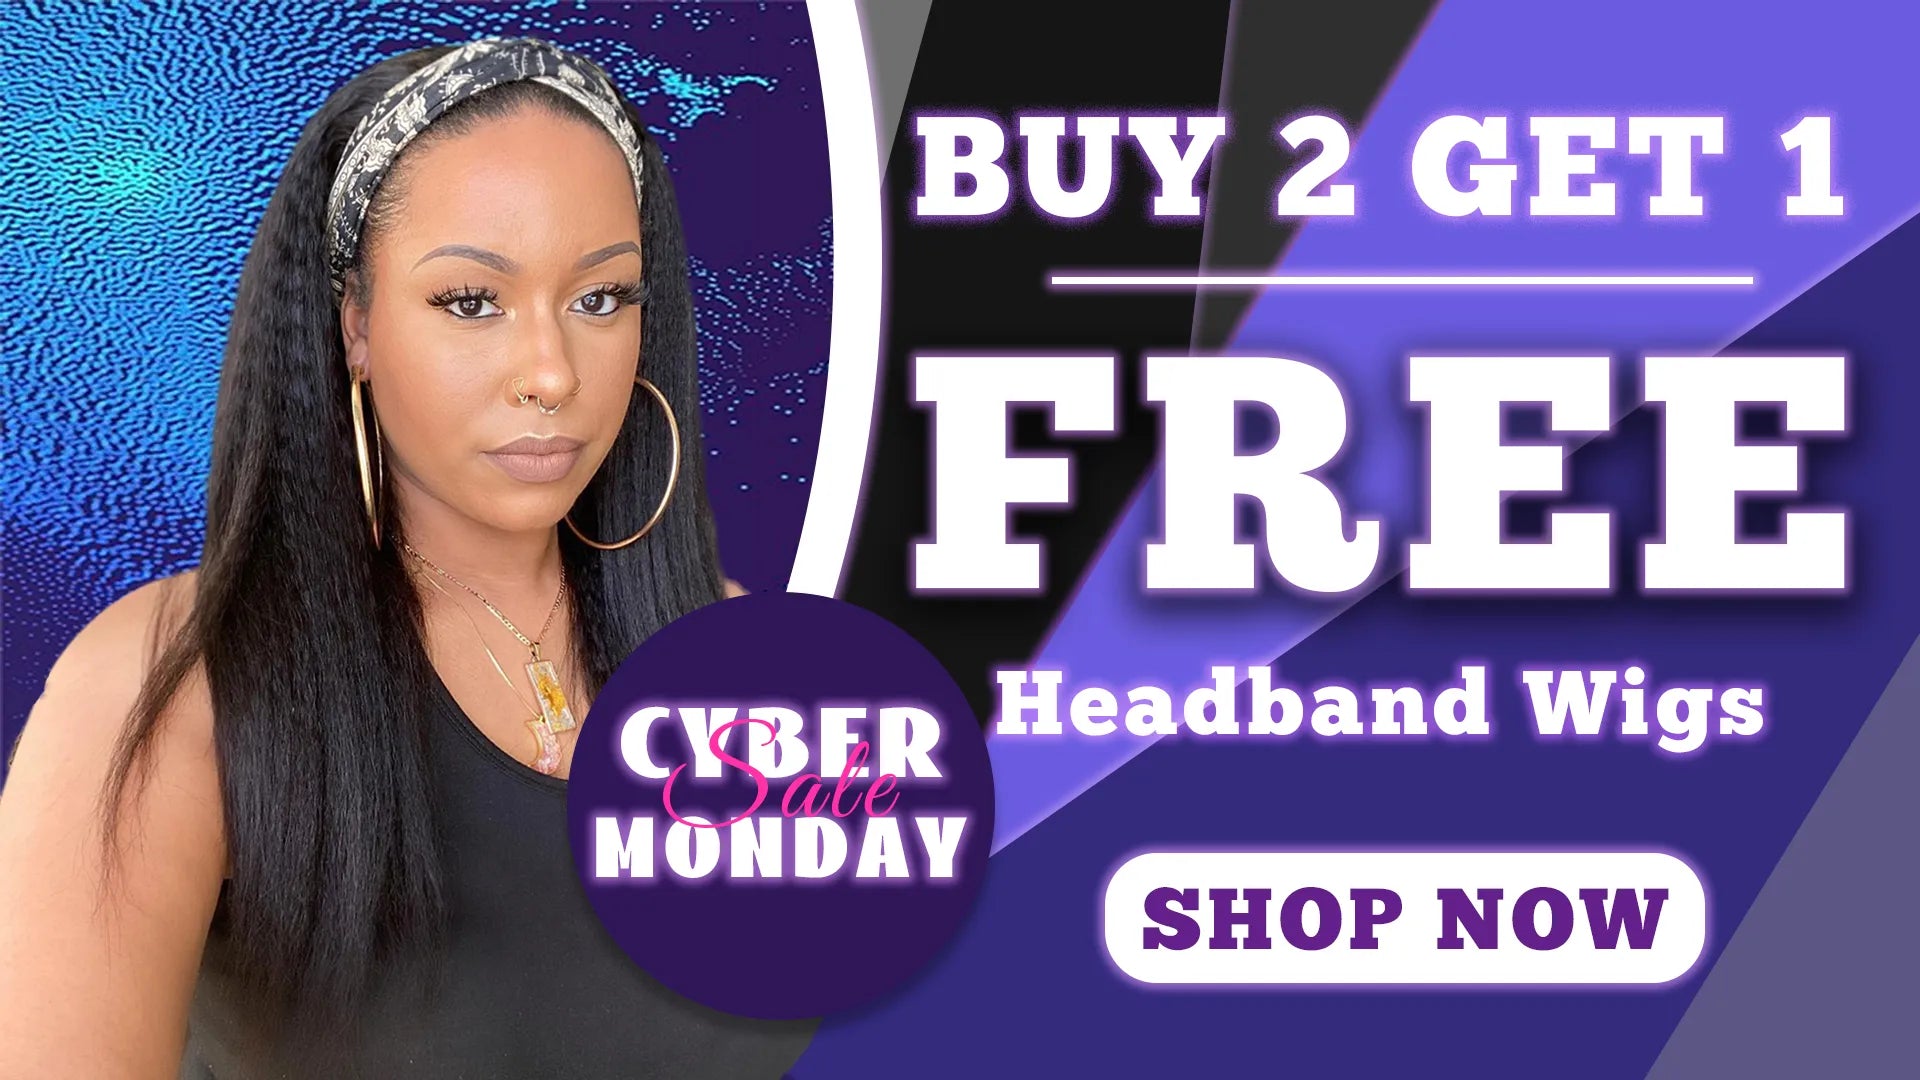 Buy 2 get 1 free headband wigs sale